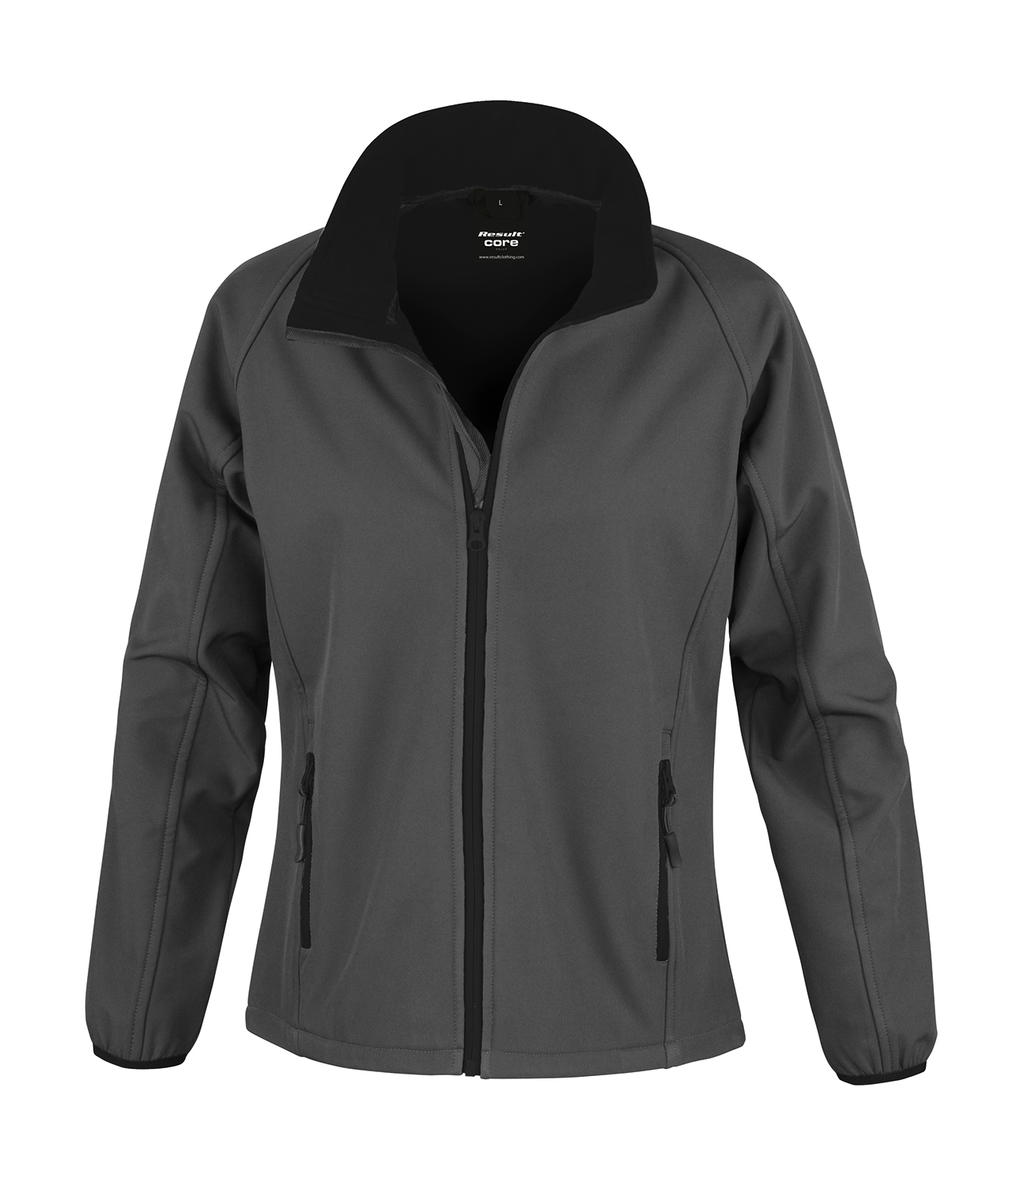  Ladies Printable Softshell Jacket in Farbe Charcoal/Black